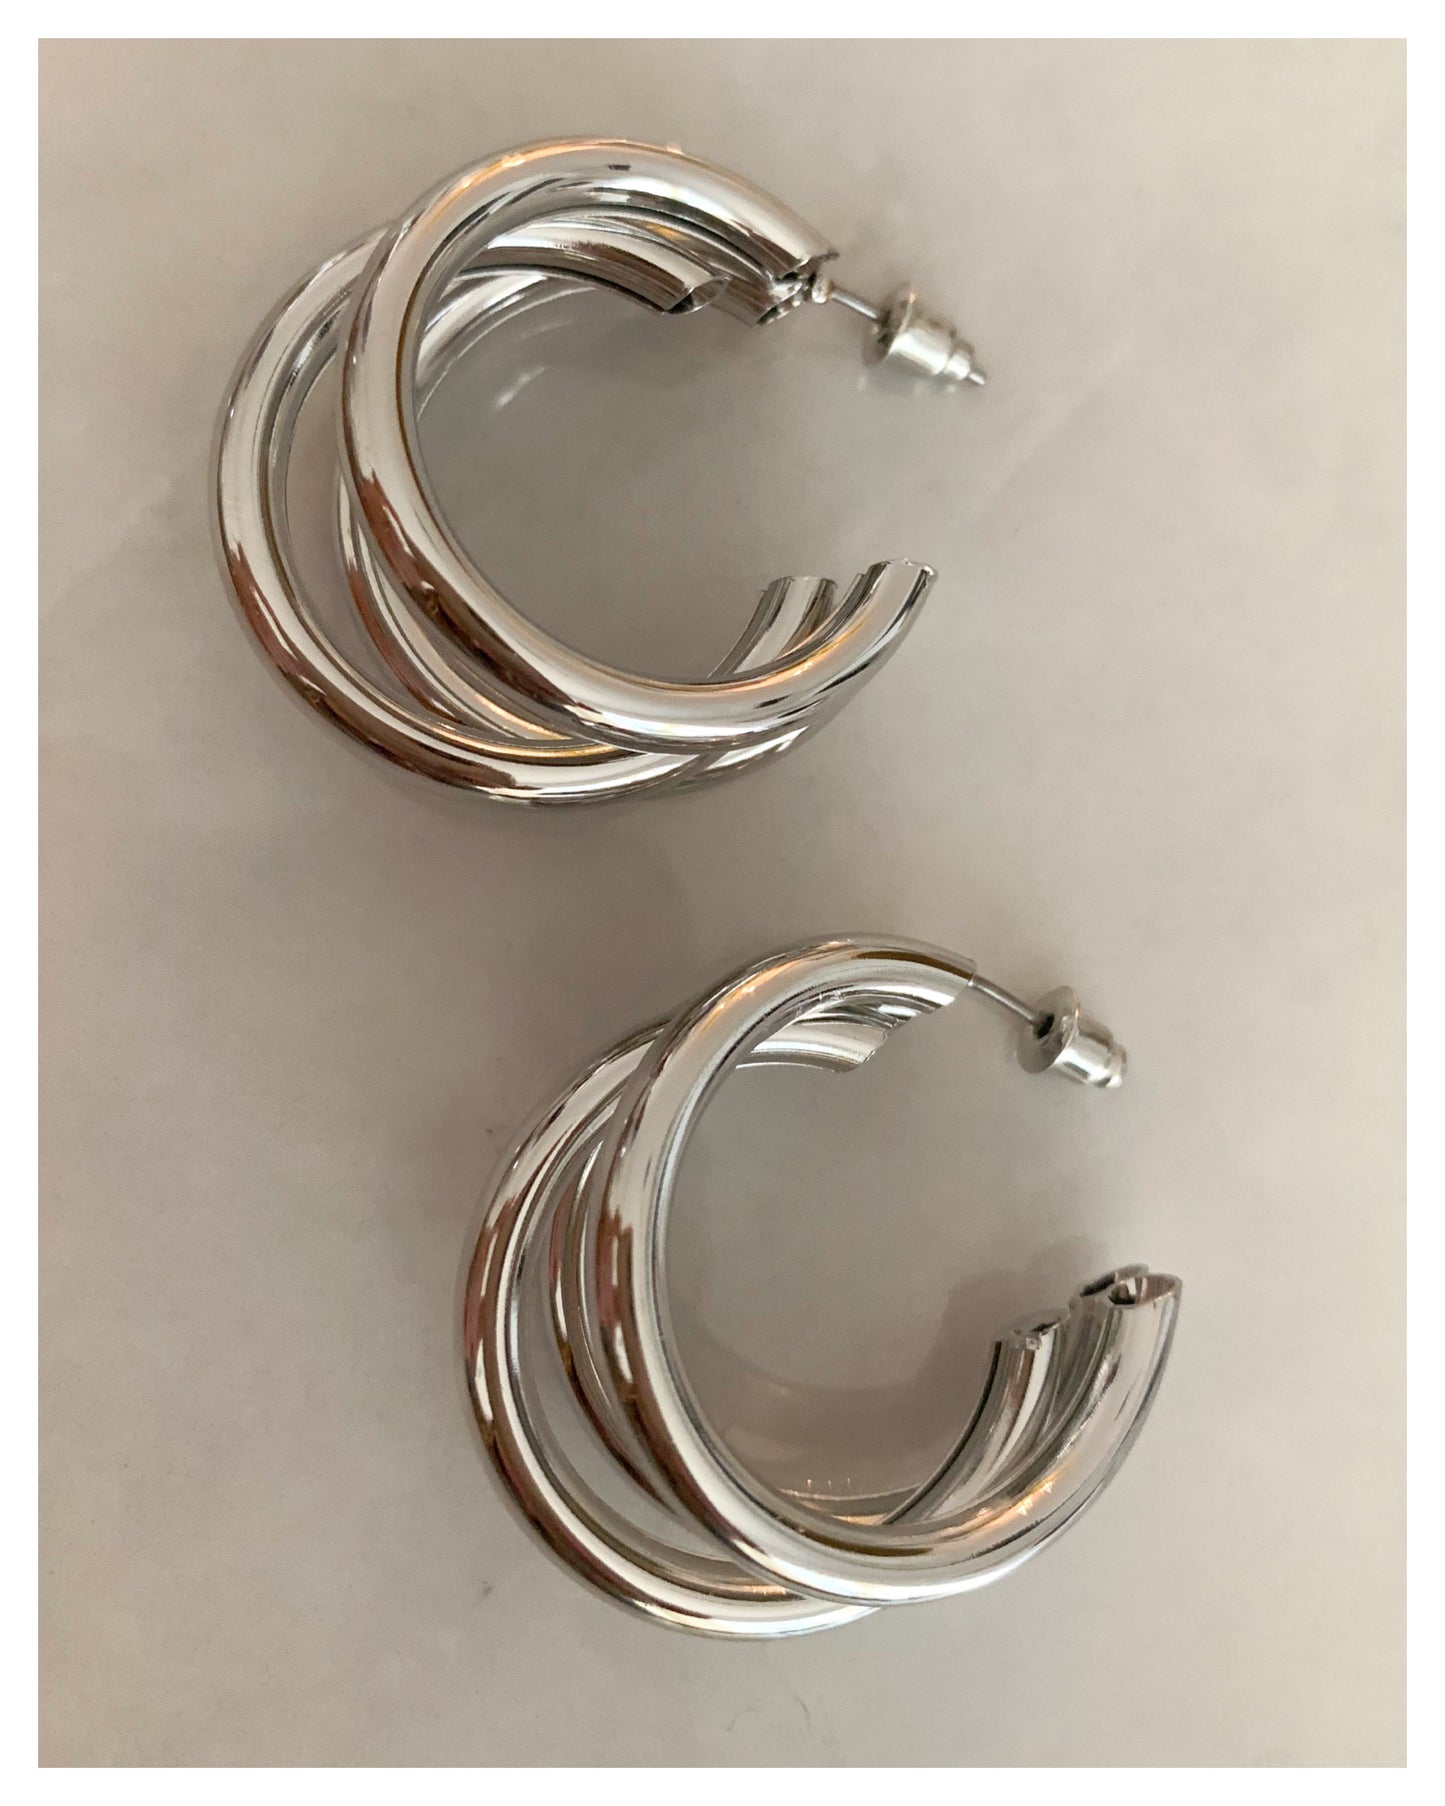 Triple Hoops Earrings